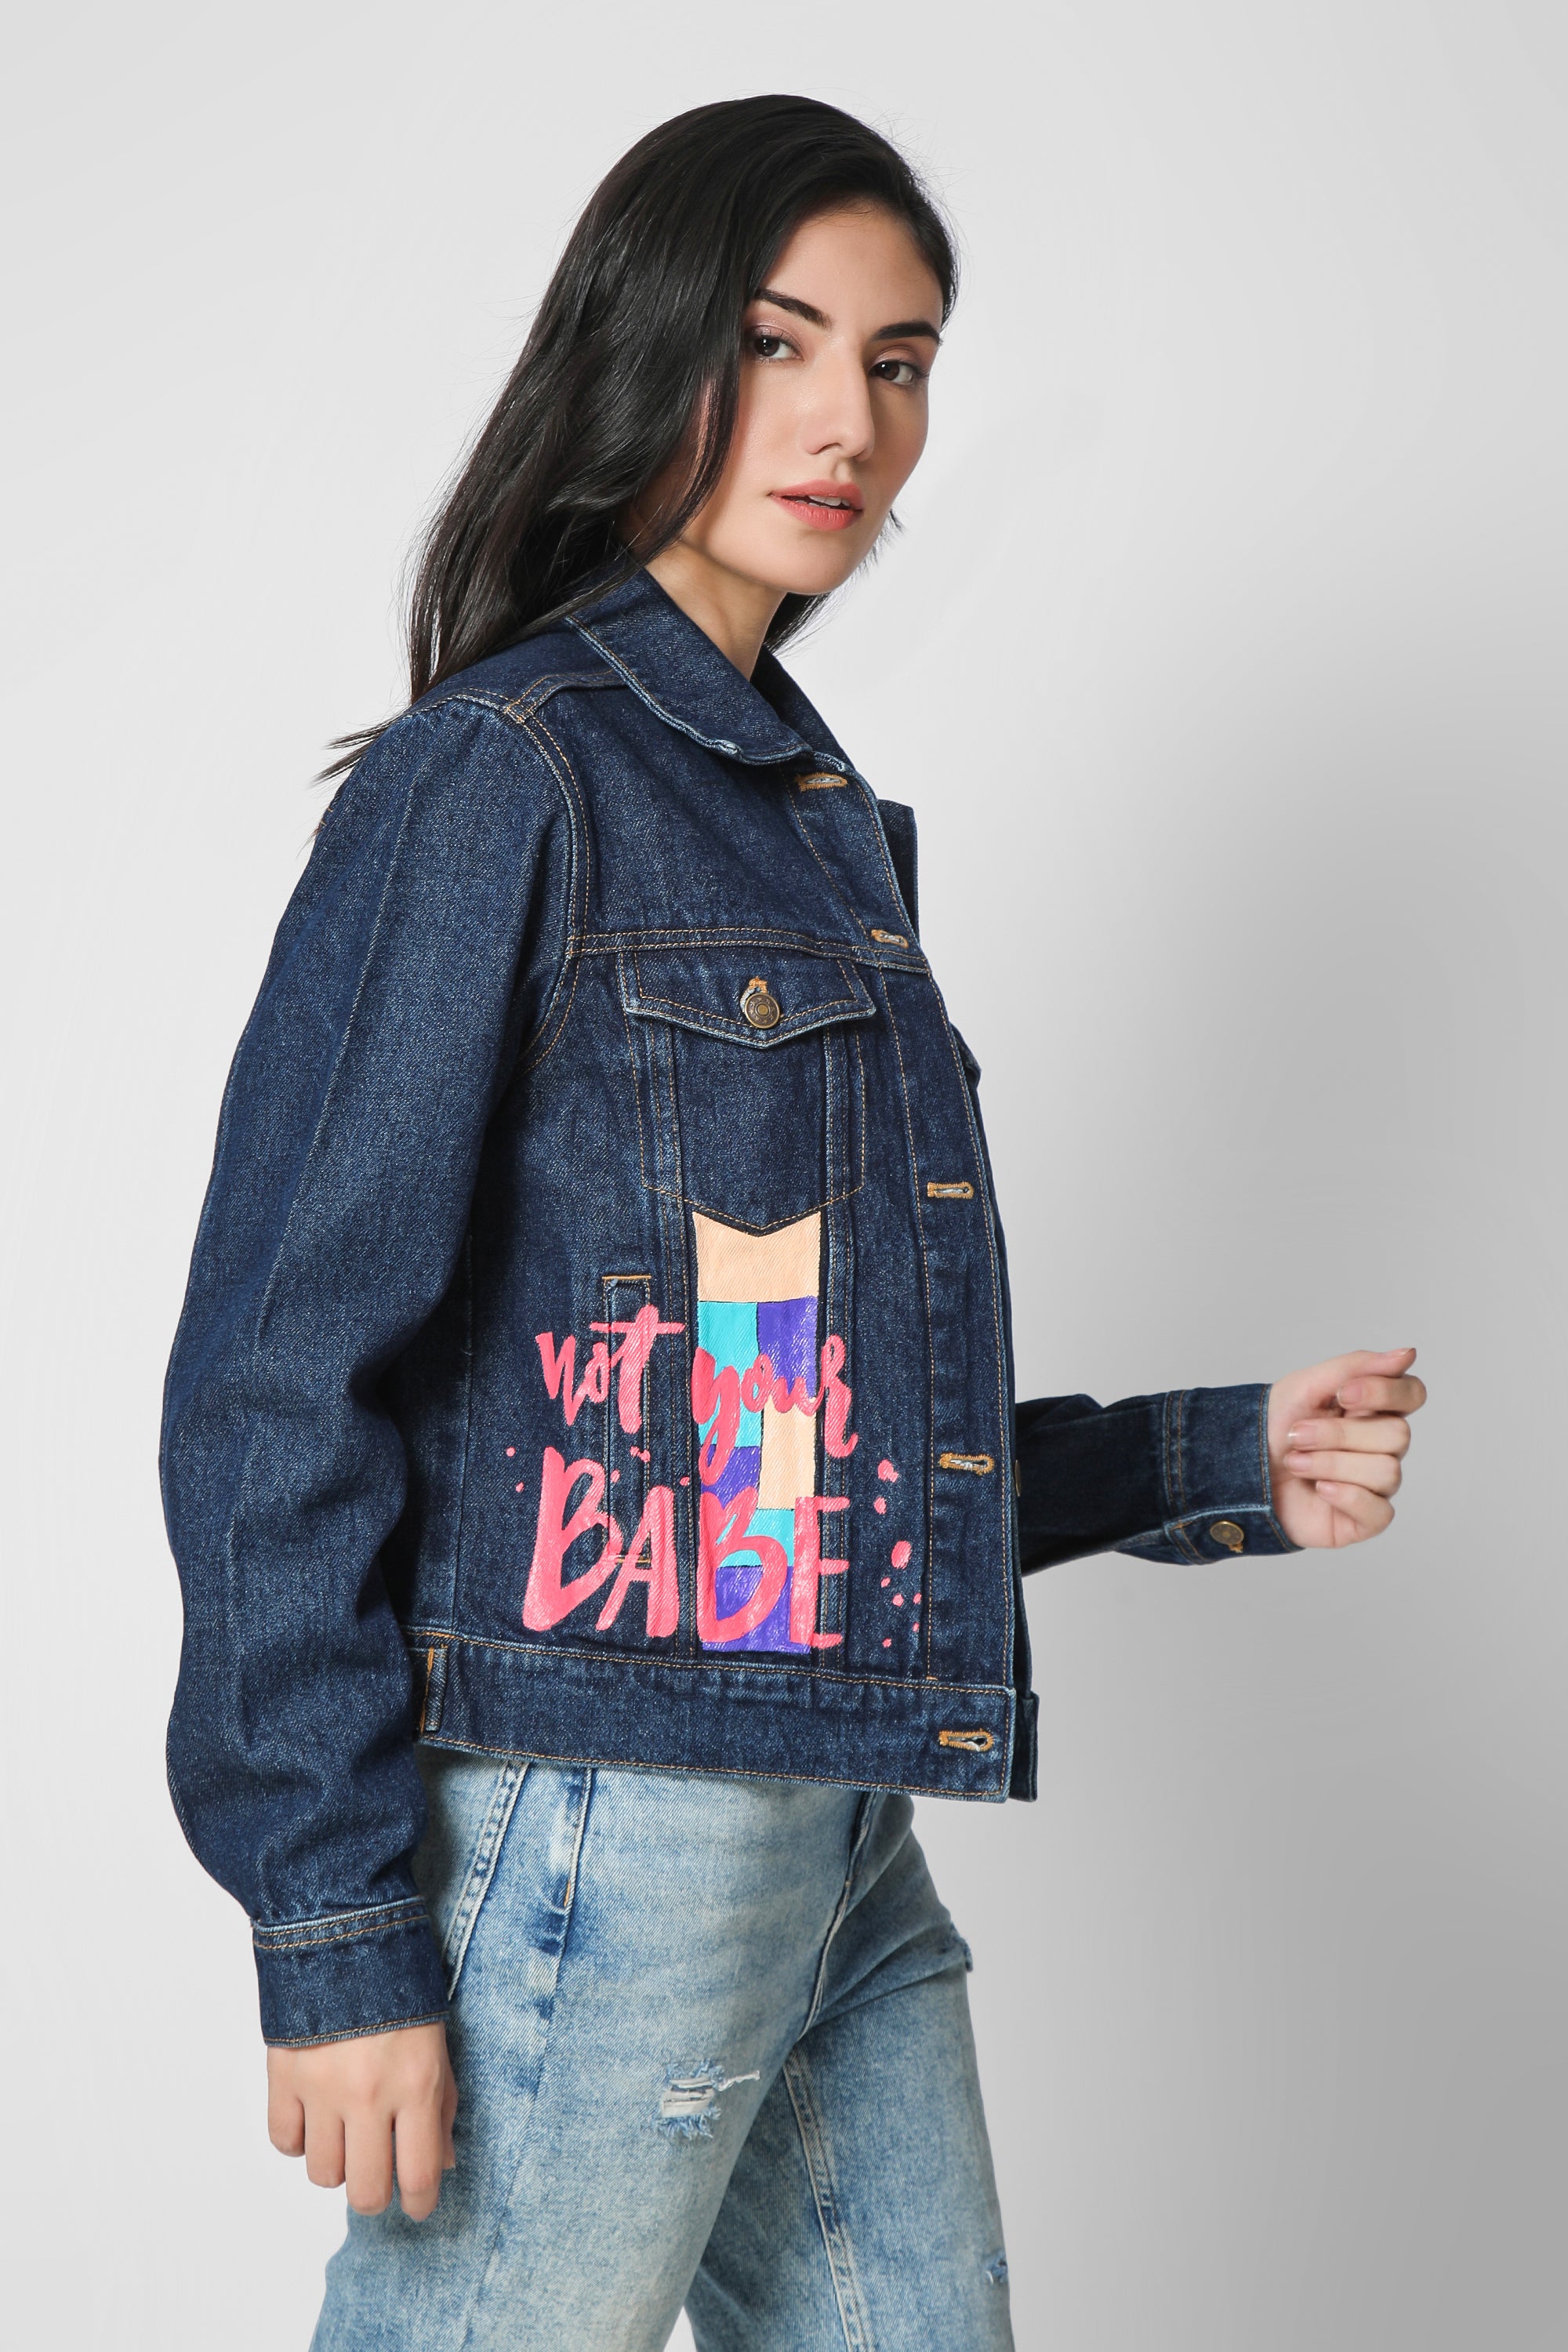 KALI GODDESS Hand Painted Custom Denim Jean Jacket - Etsy | Hand painted  denim jacket, Custom denim, Painted jacket